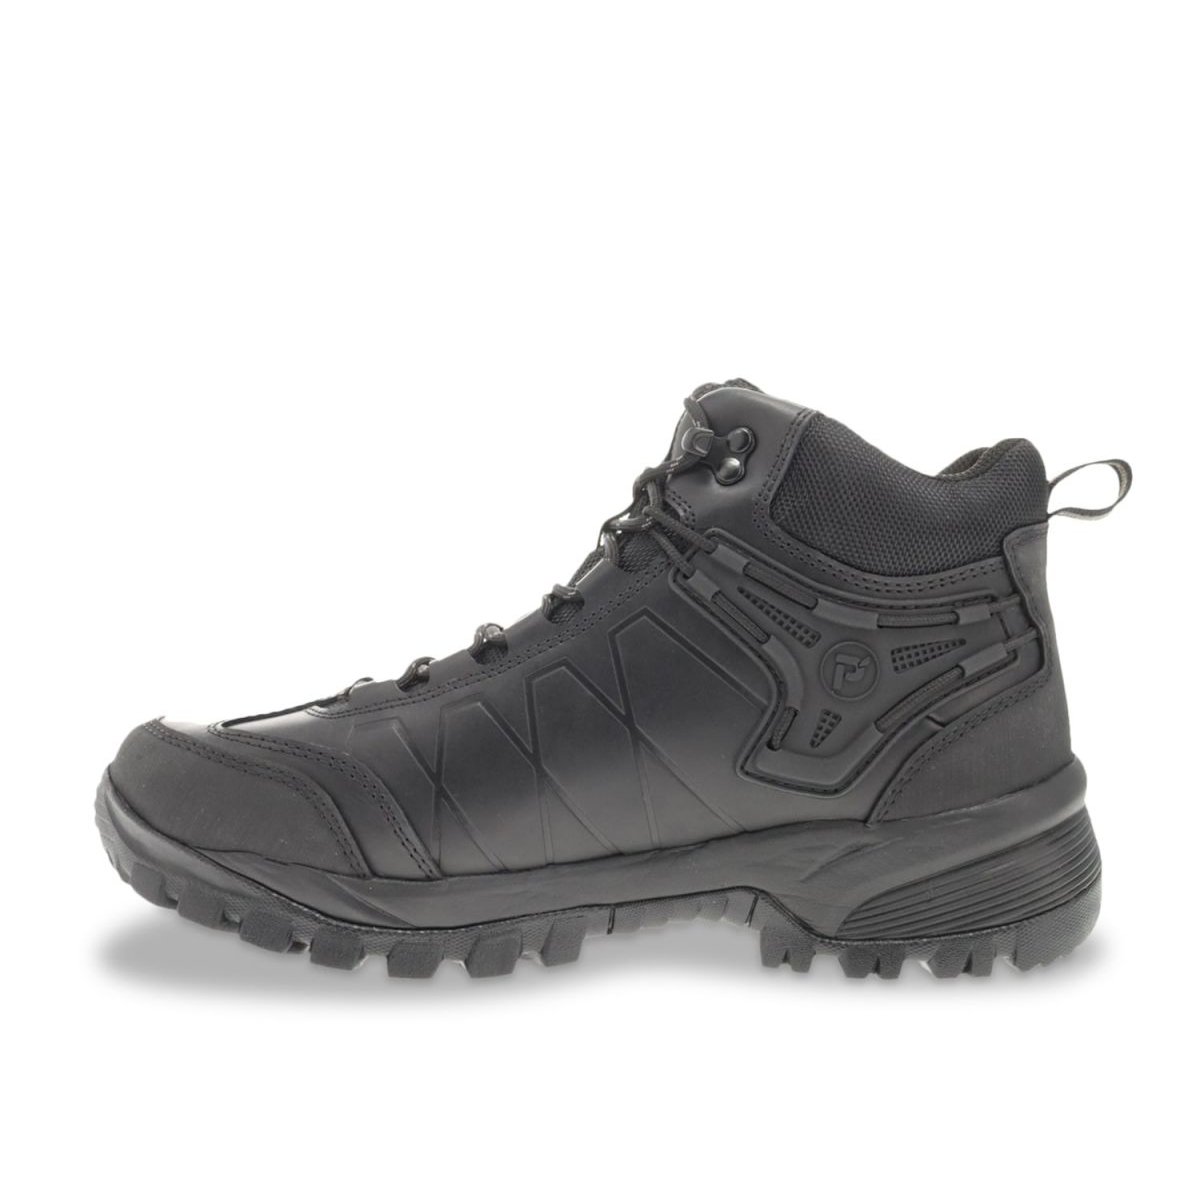 Propet Men's Ridge Walker Force Hiking Boots Black - MBA052LBLK BLACK - BLACK, 12 X-Wide